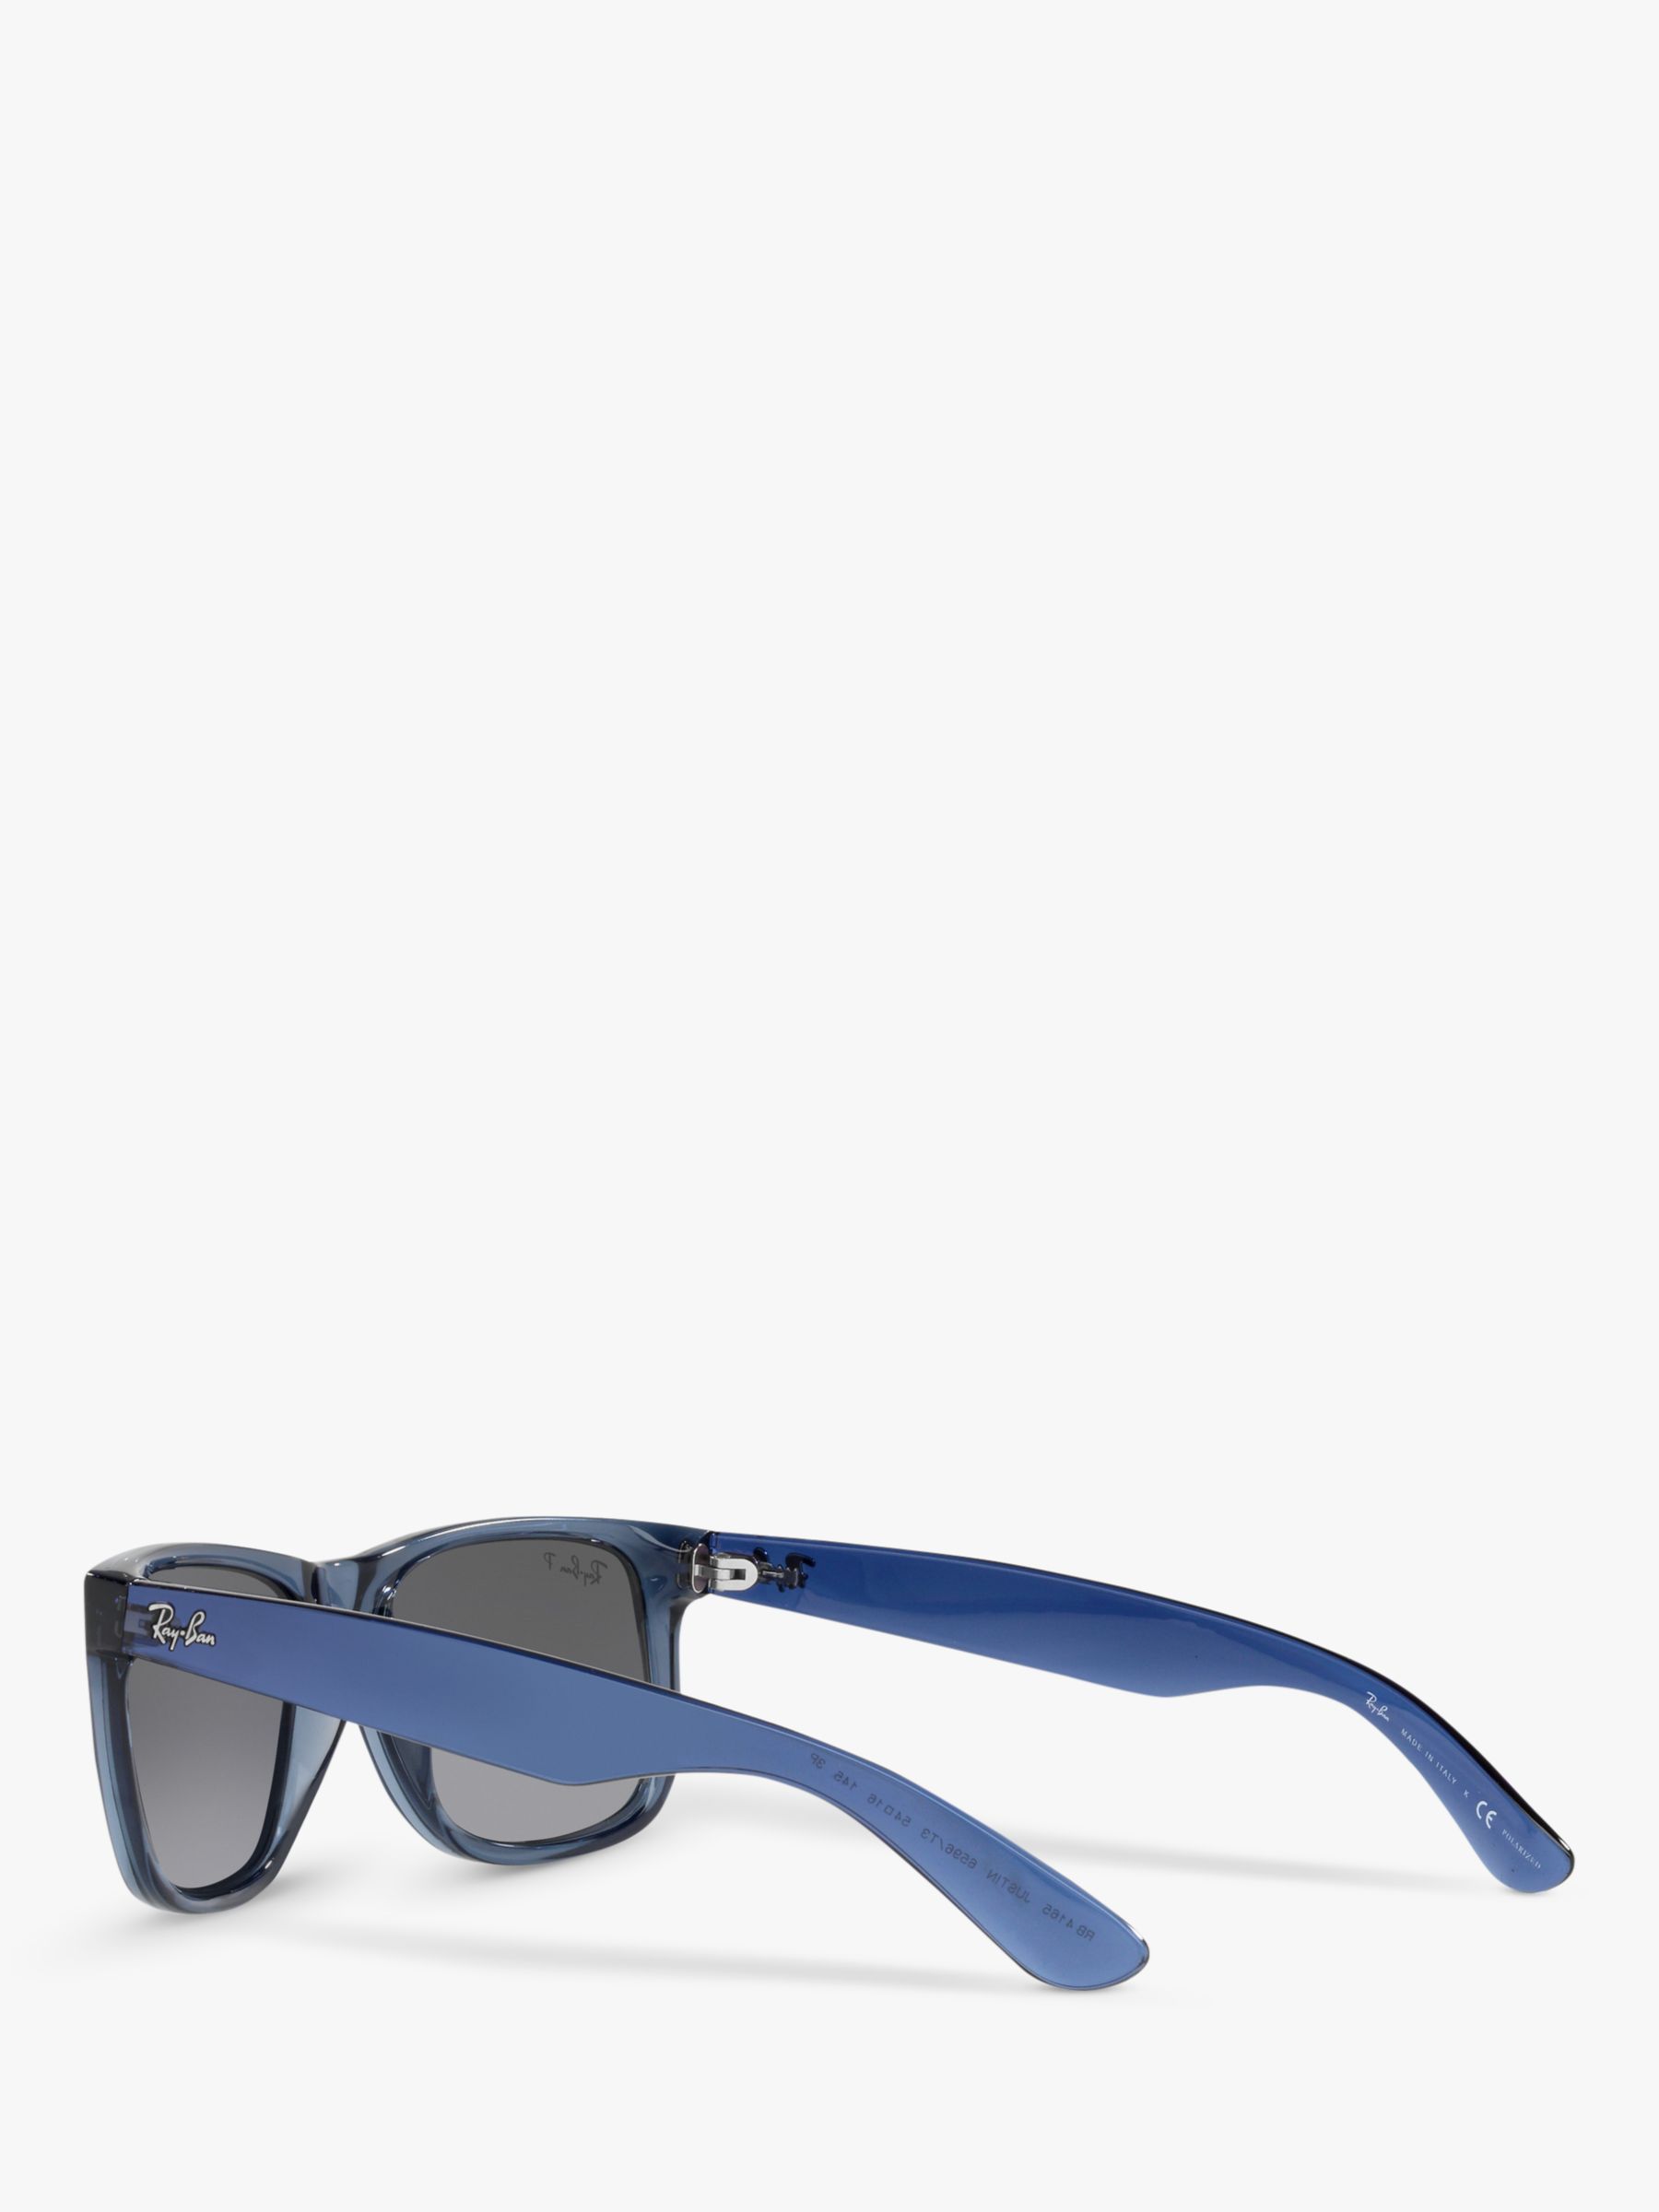 Ray-Ban RB4165 Men's Polarised Justin Square Sunglasses, Transparent Blue/Grey  Gradient at John Lewis & Partners